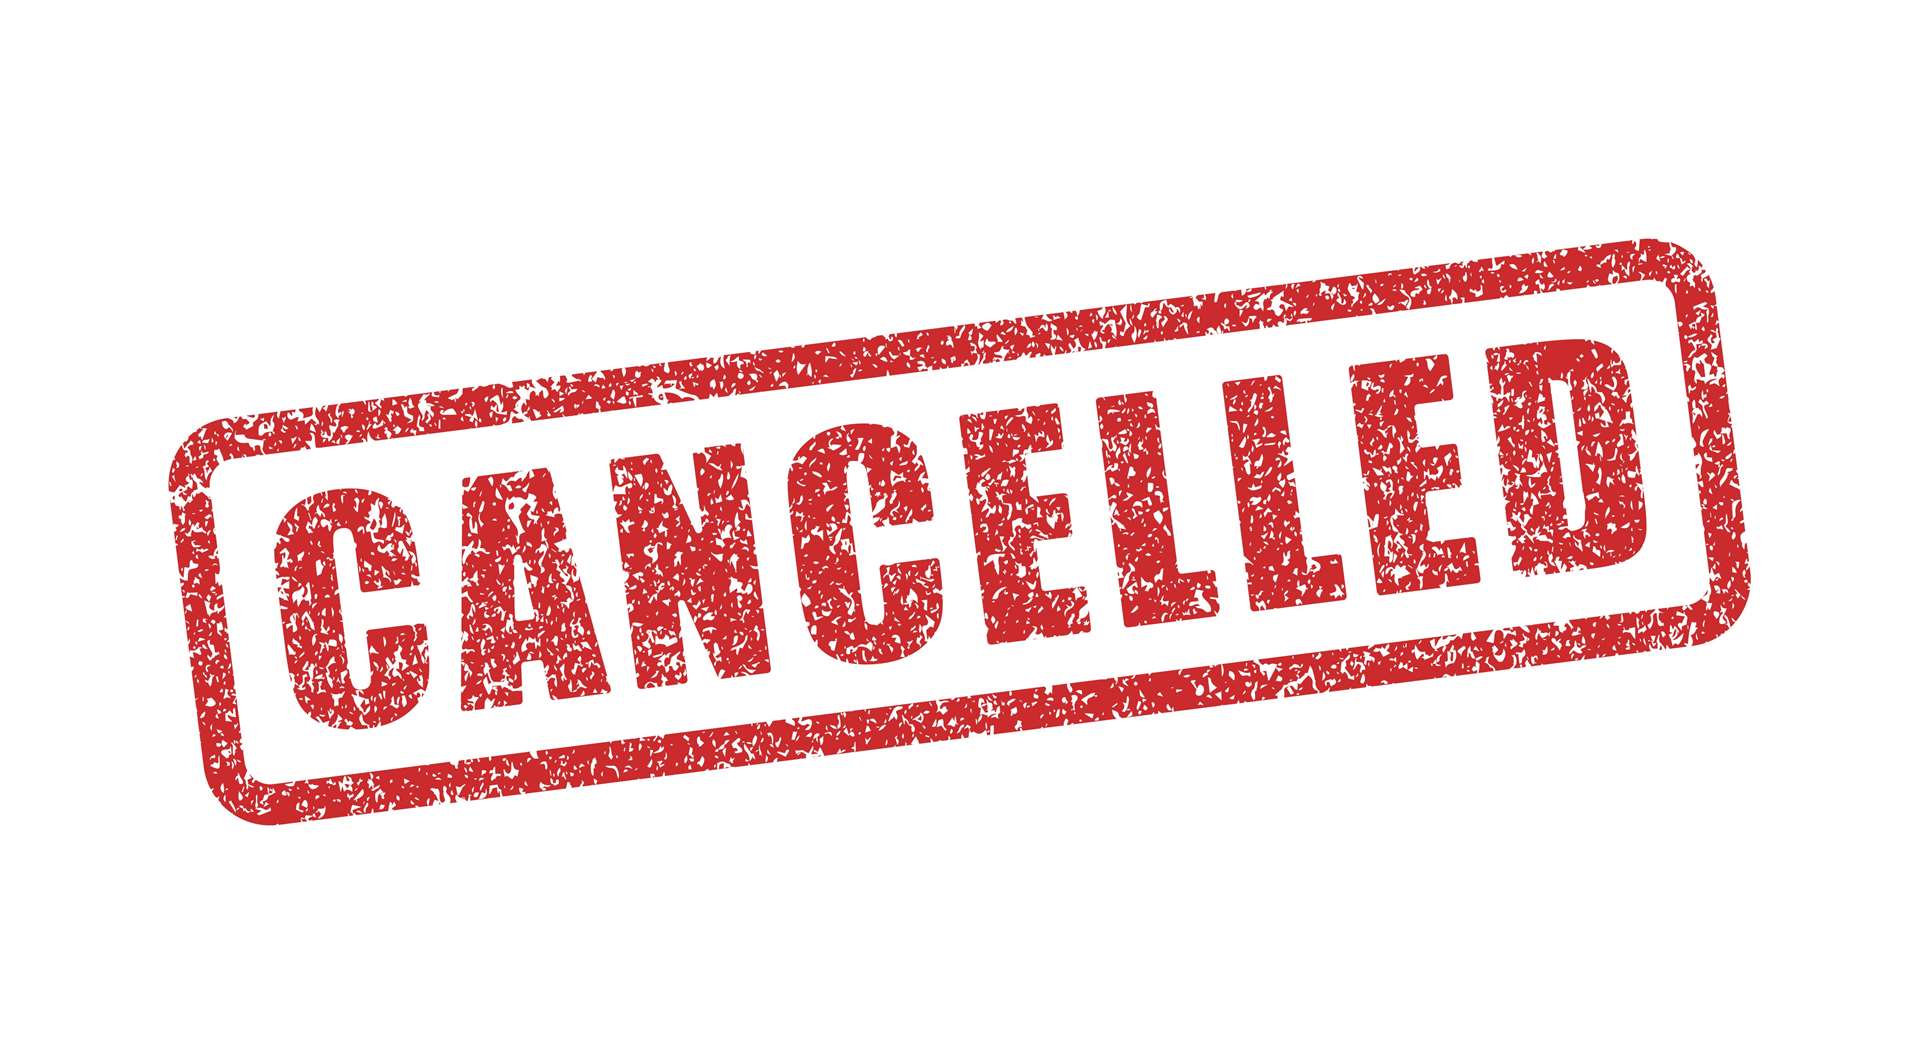 Golspie Gala Week 2021 has been cancelled.